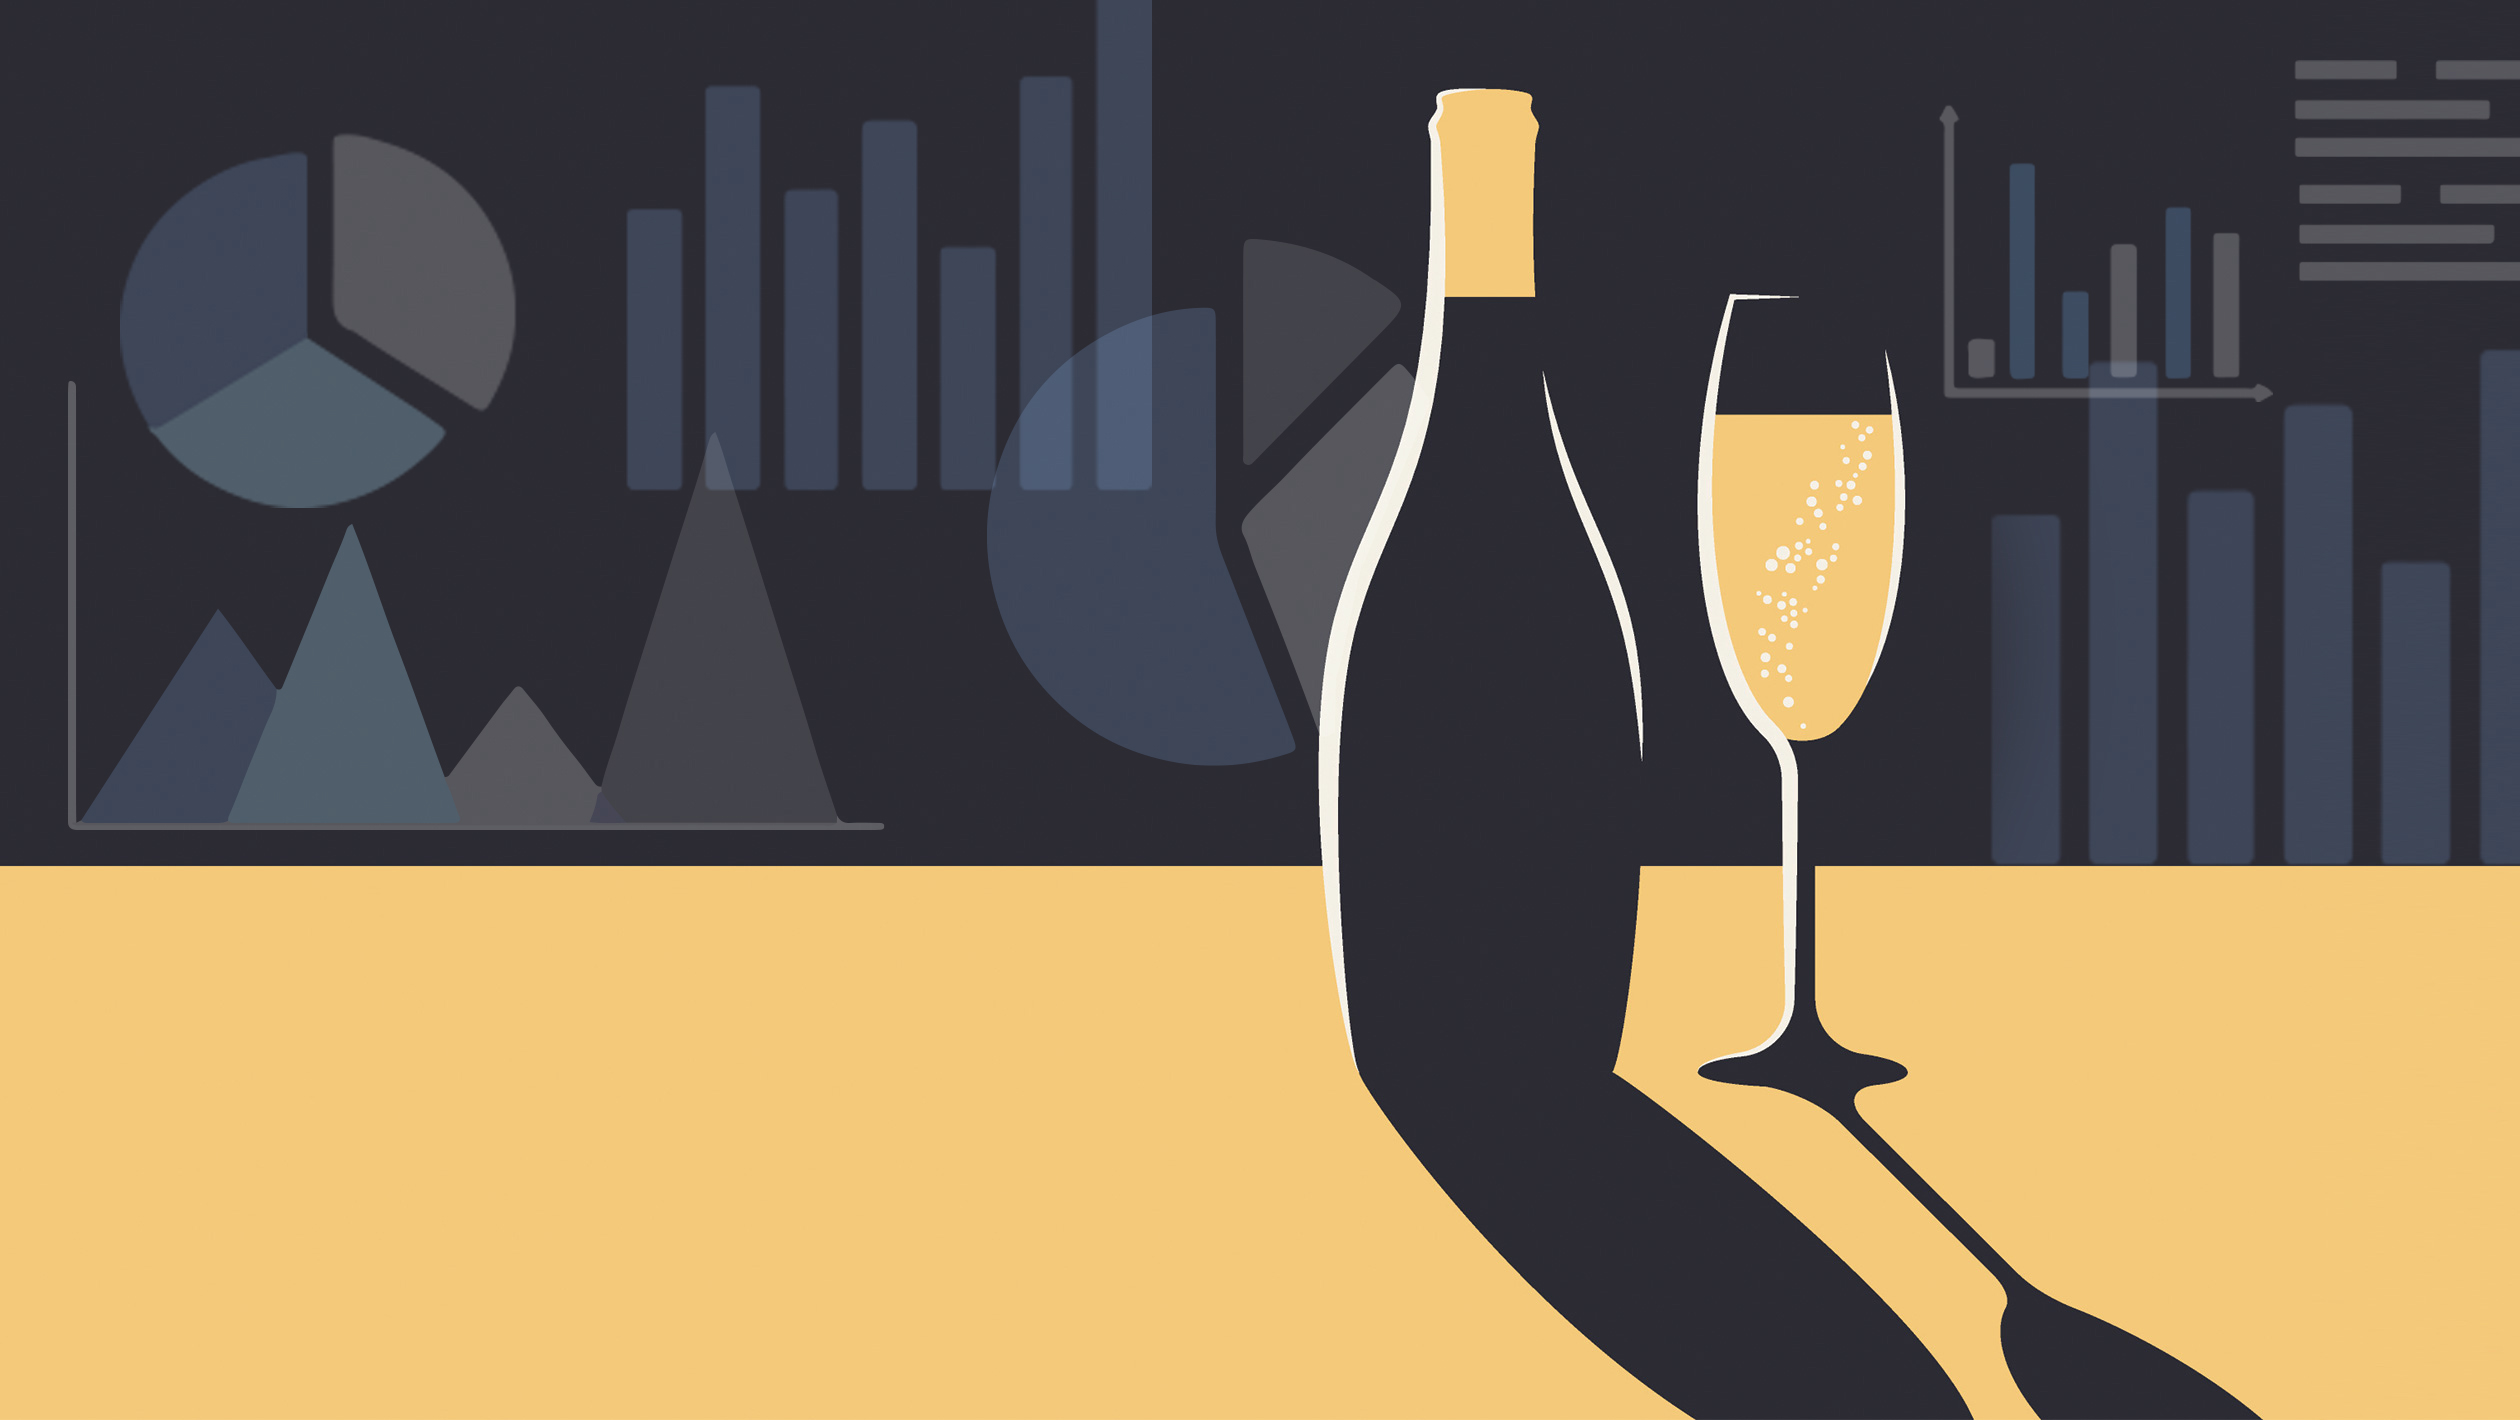 Champagne Sales Reach Record High in 2021 - Elite Traveler